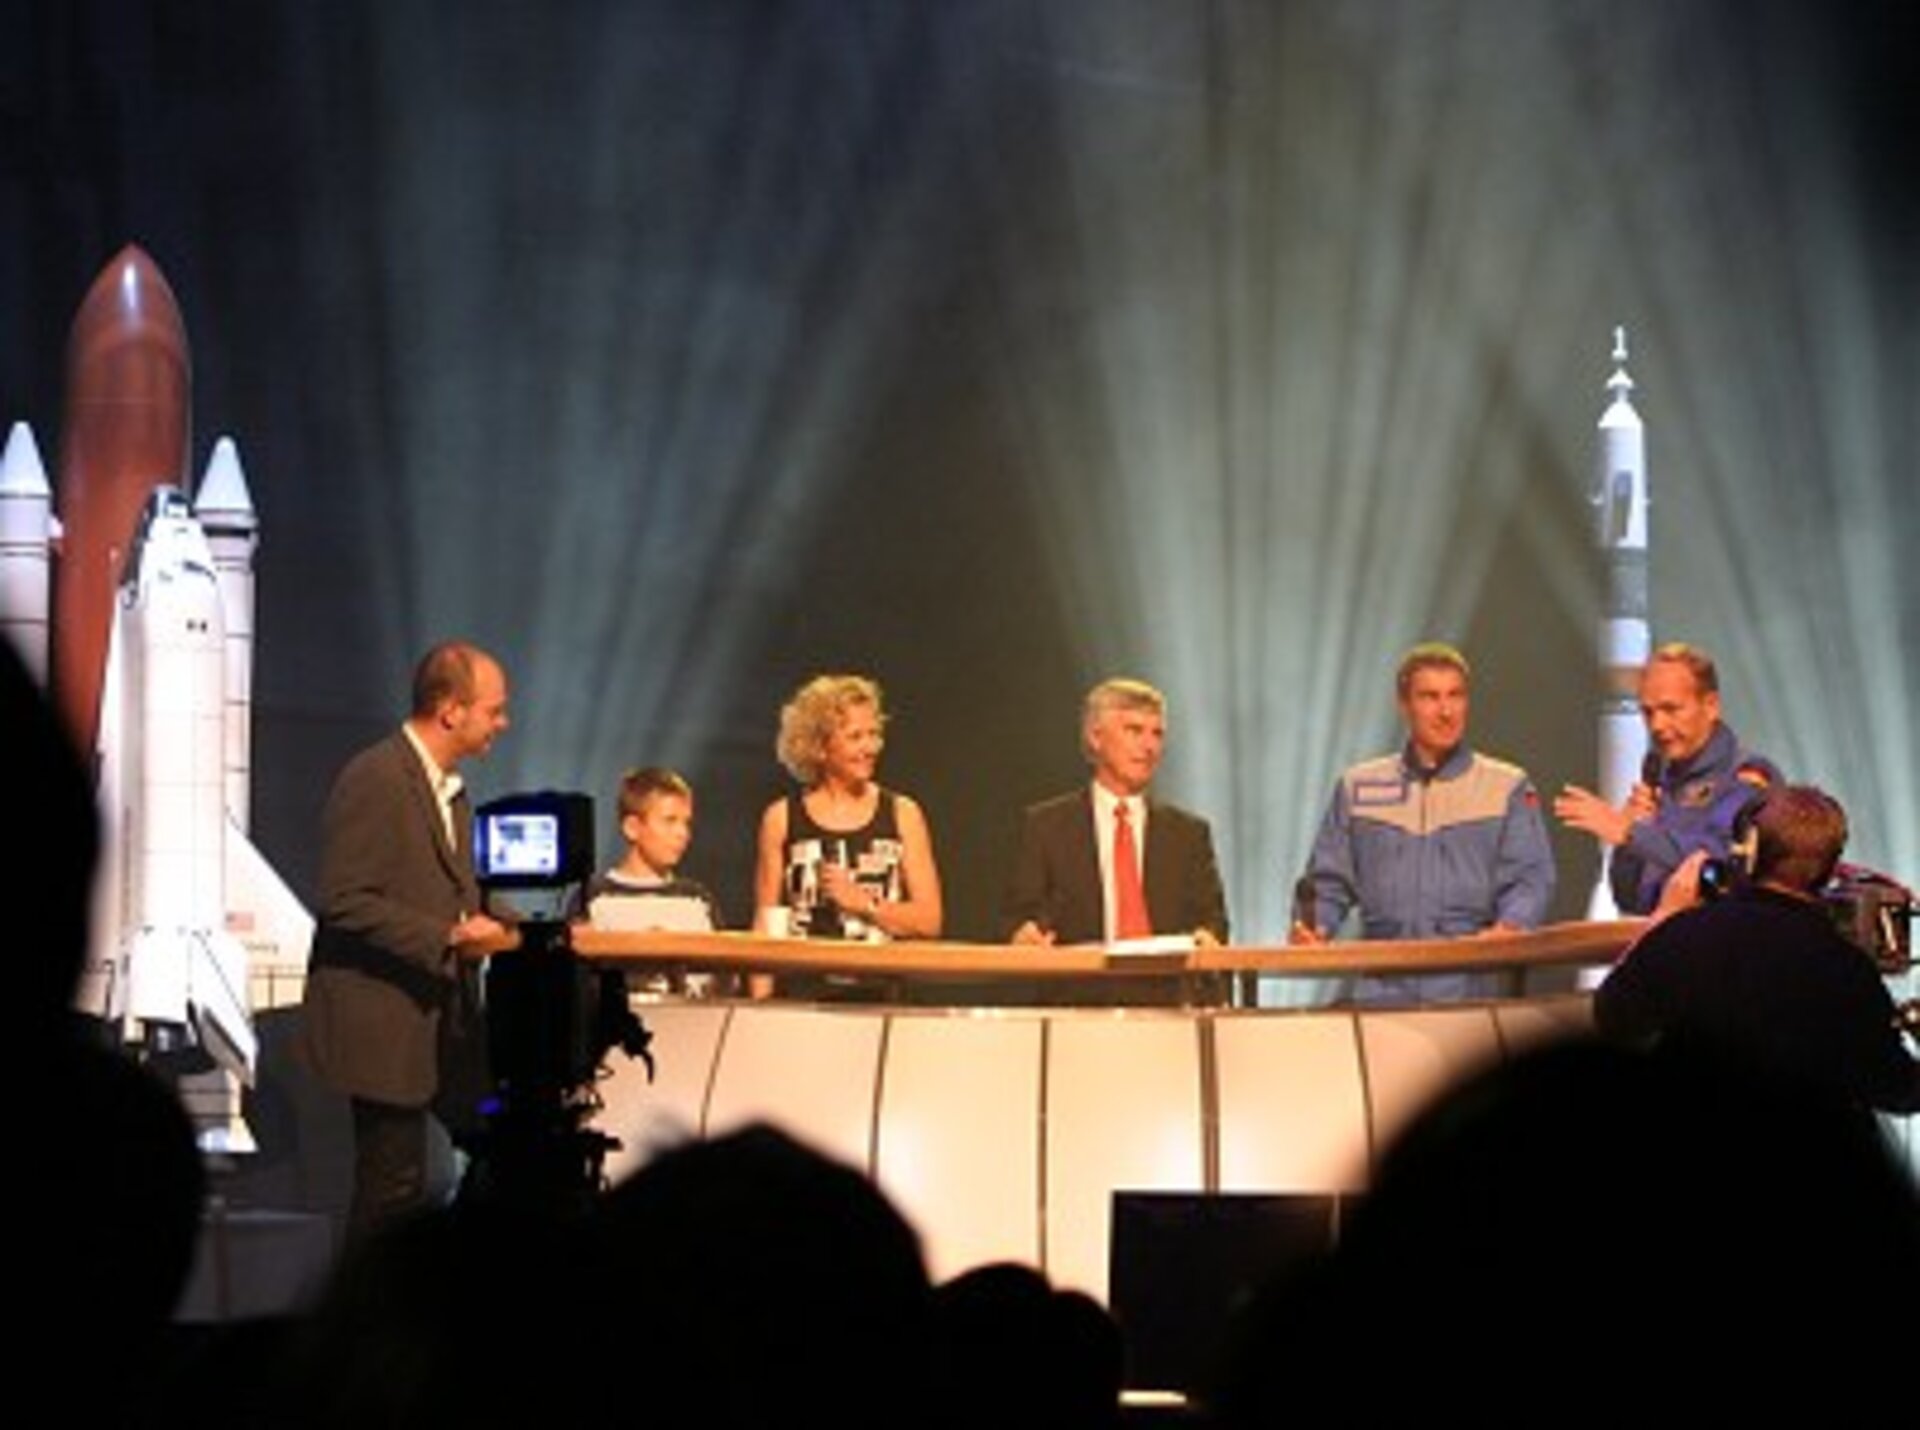 Co-hosted by former ESA astronaut Ulf Merbold and German TV presenter Evi Seibert